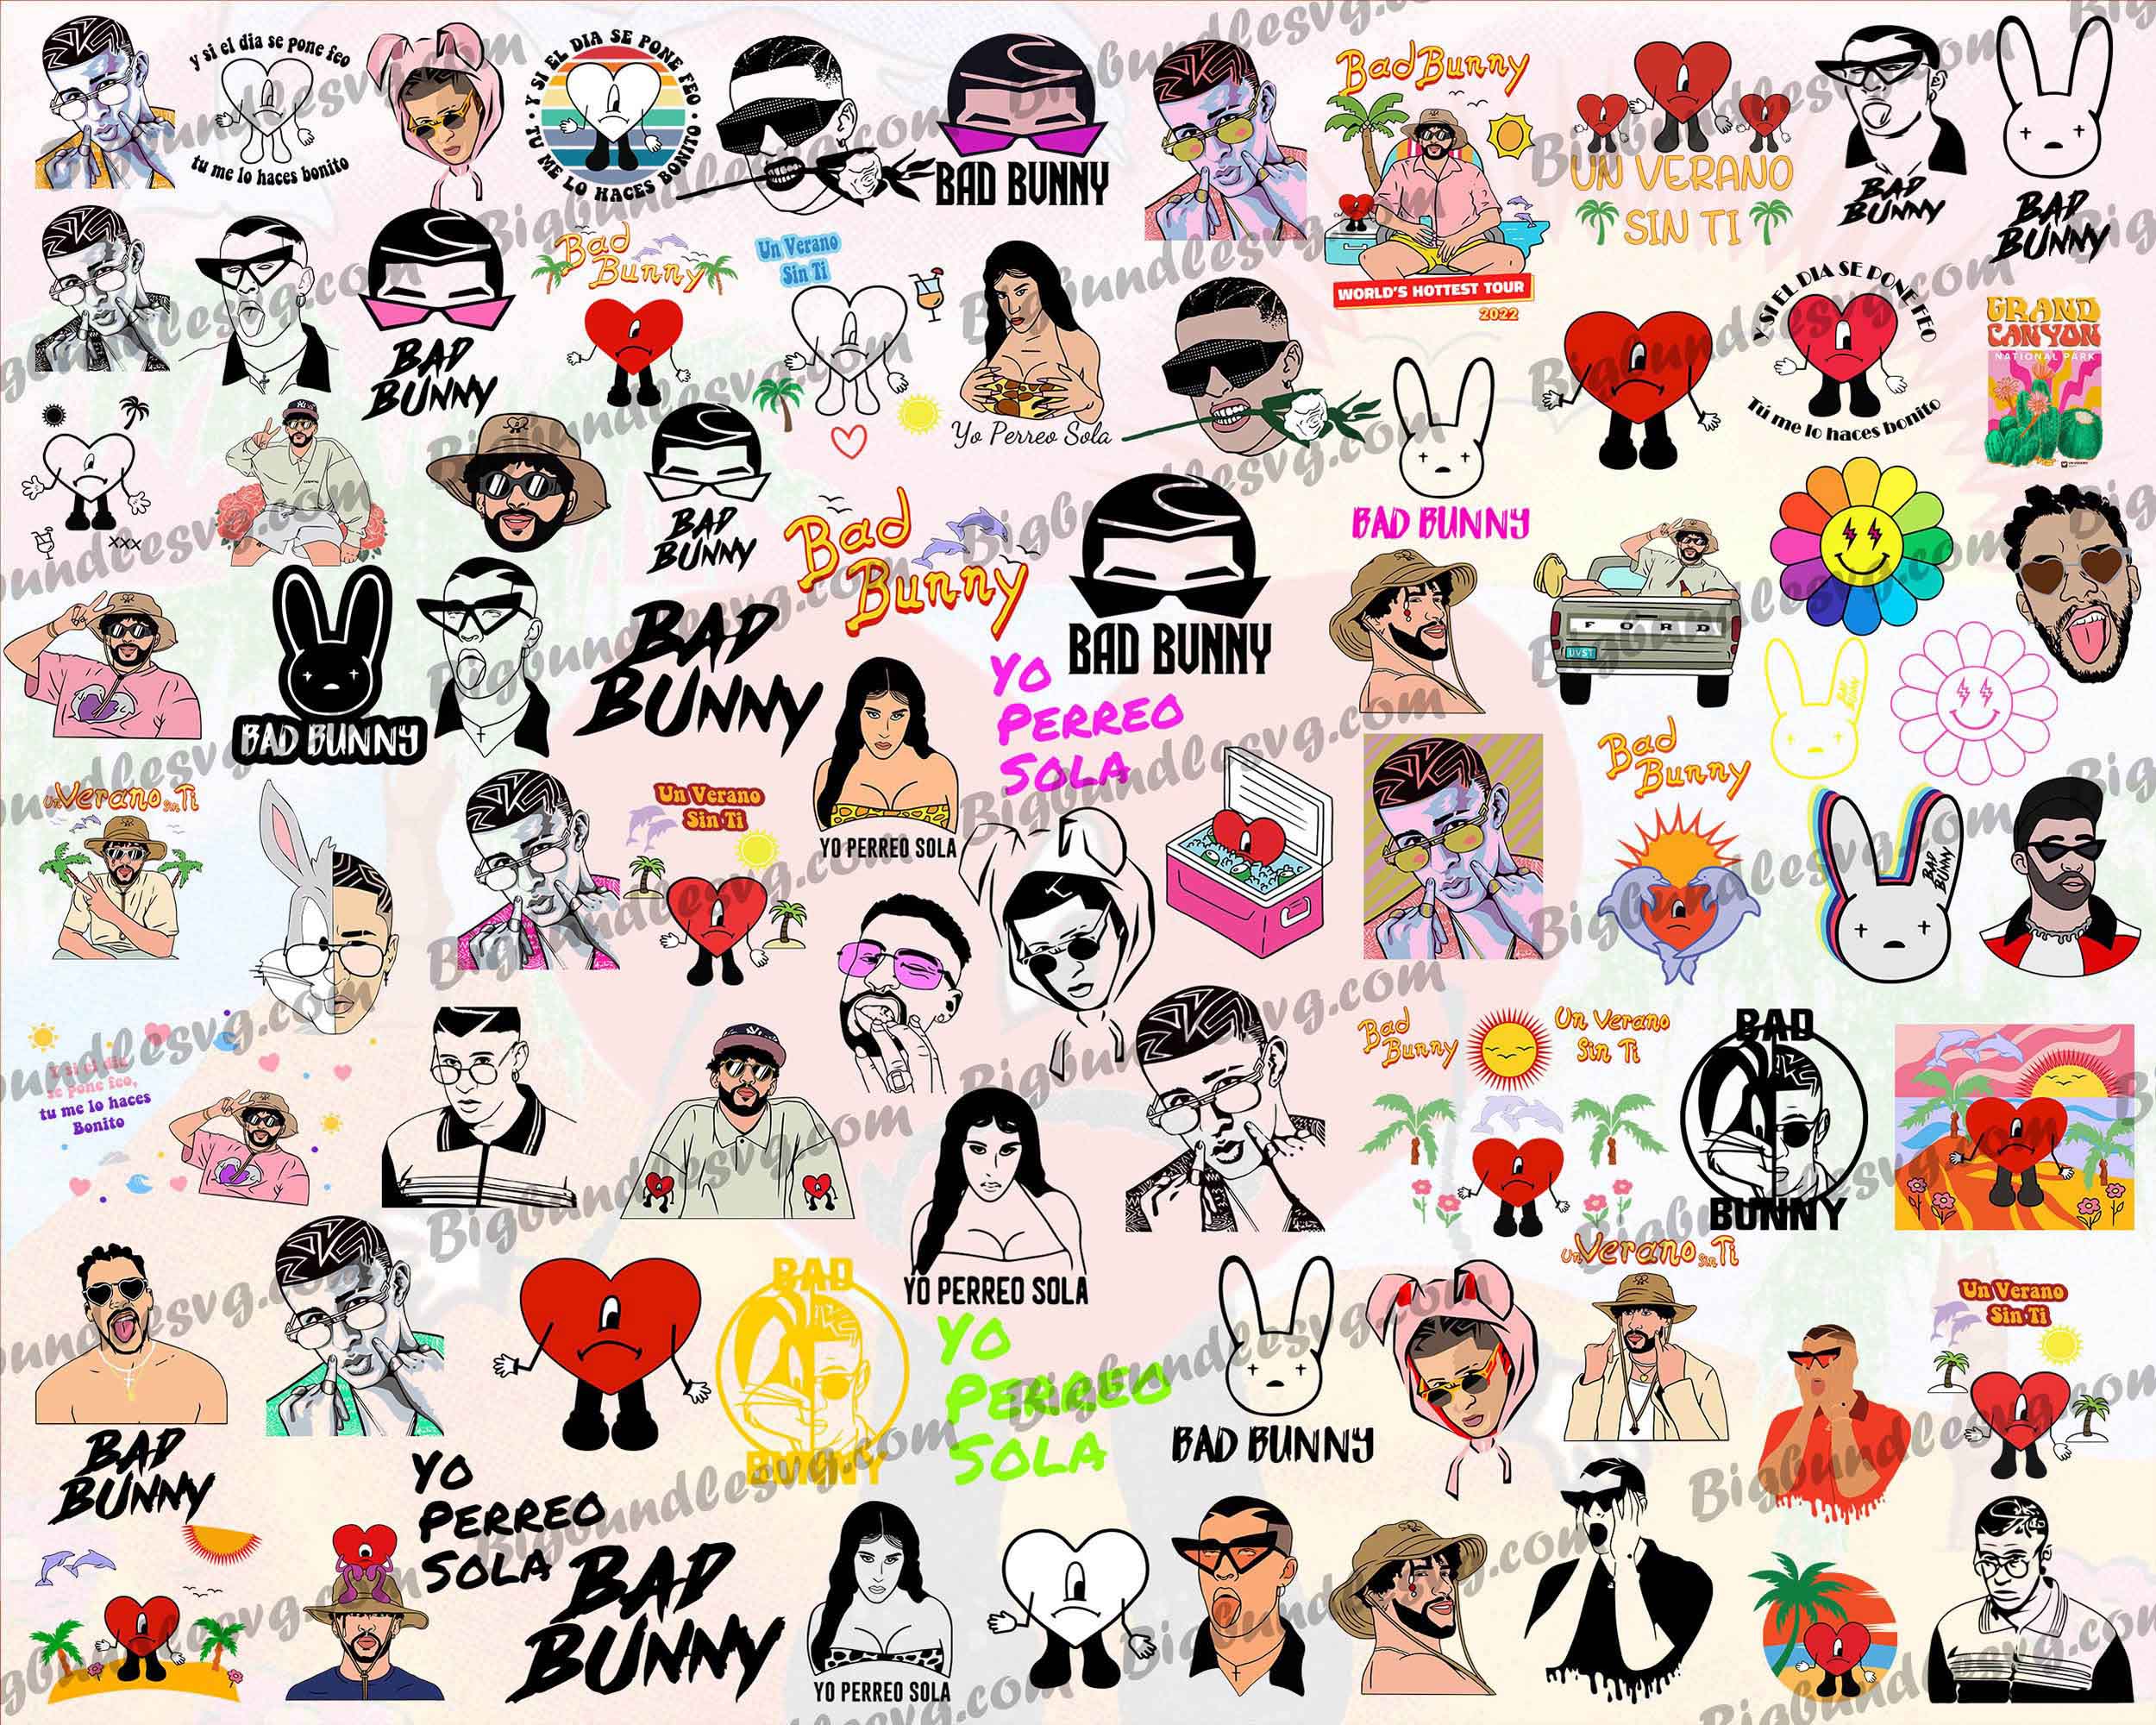 2000+ Bad Bunny, Bad Bunny digital designs, Bad Bunny svg, png, eps, dxf, Digital download.